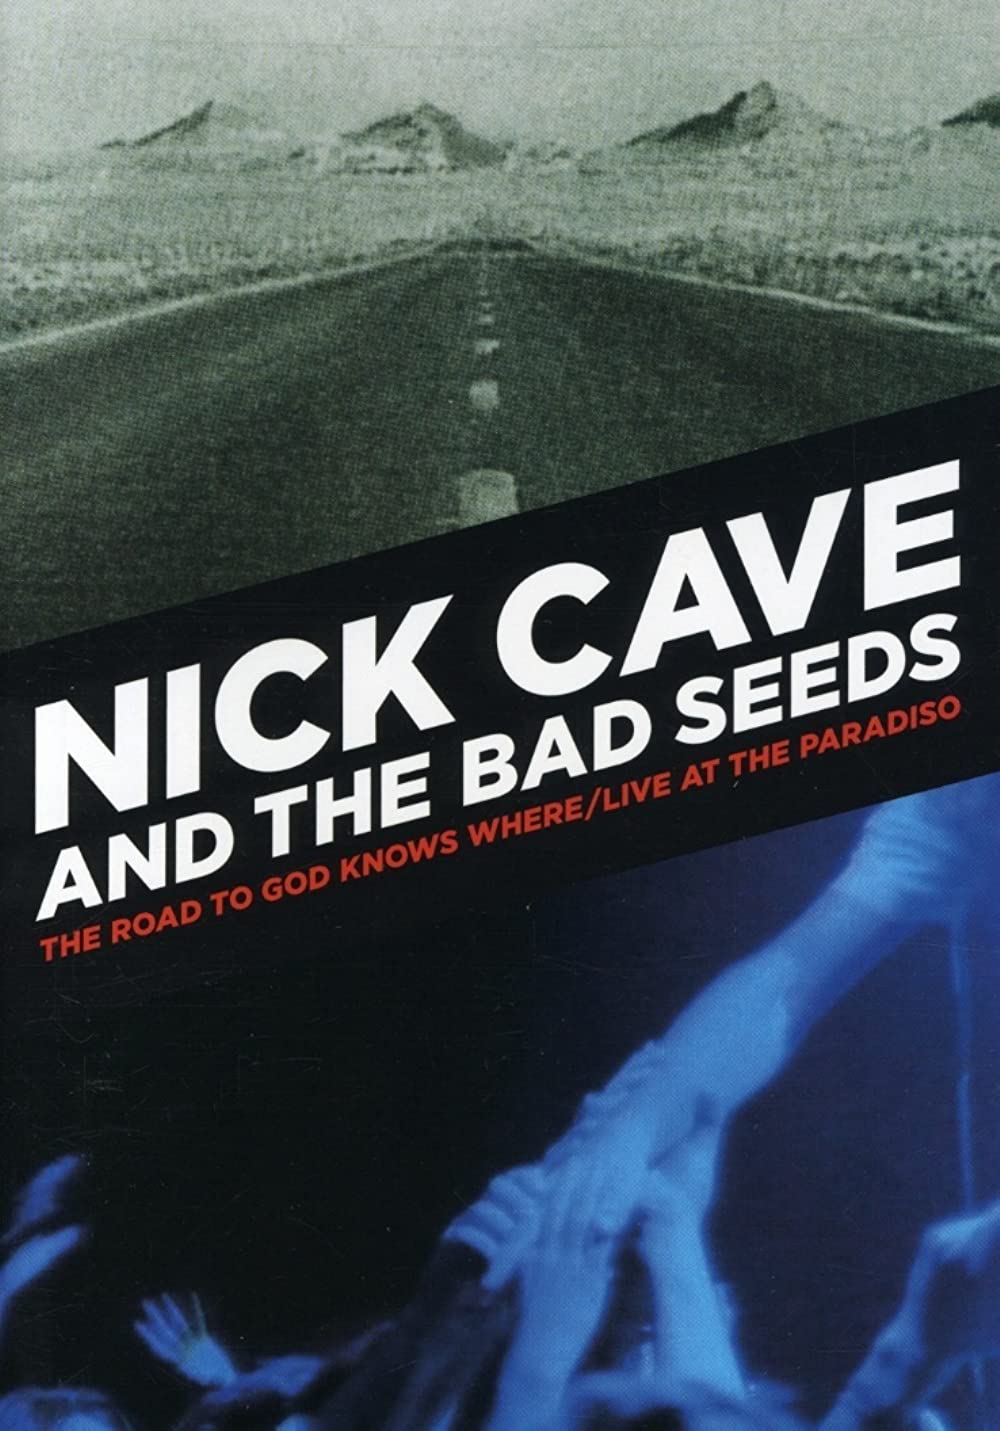 Filmbeschreibung zu Nick Cave - The Road To God Knows Where